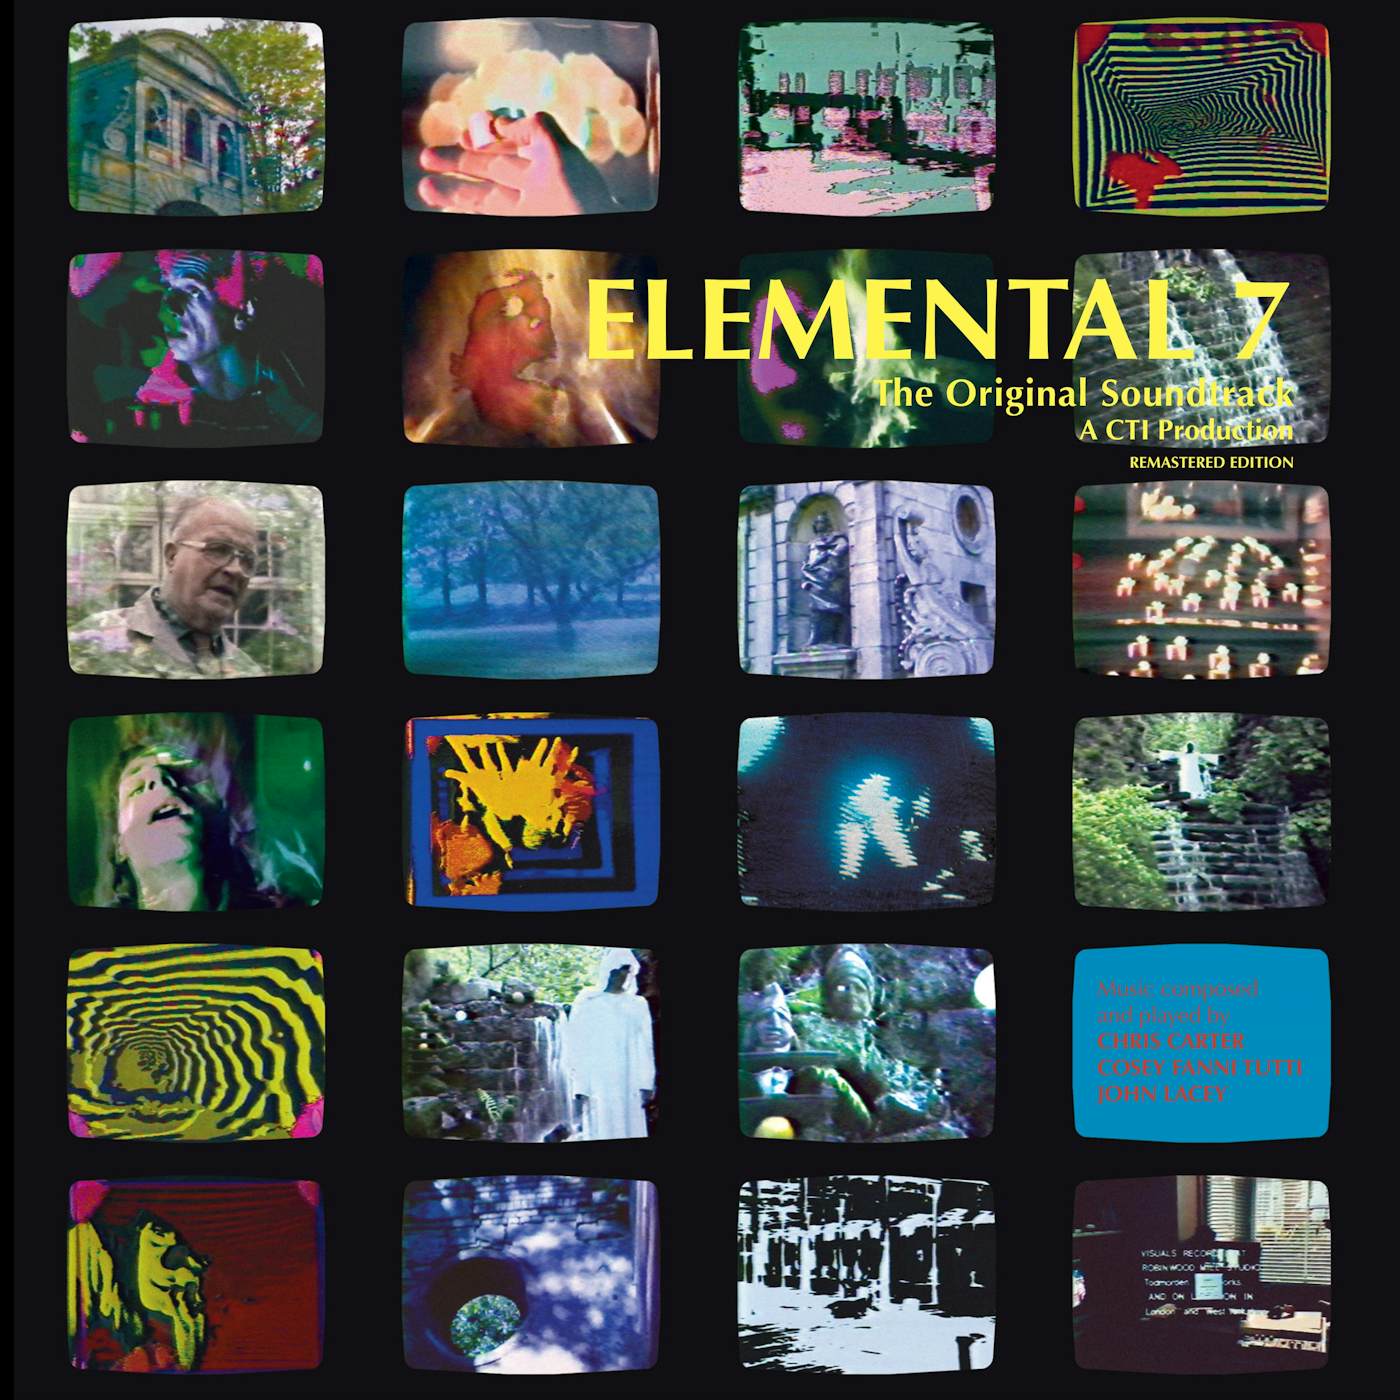 Chris & Cosey 'Elemental Seven' Vinyl LP - Green Vinyl Record